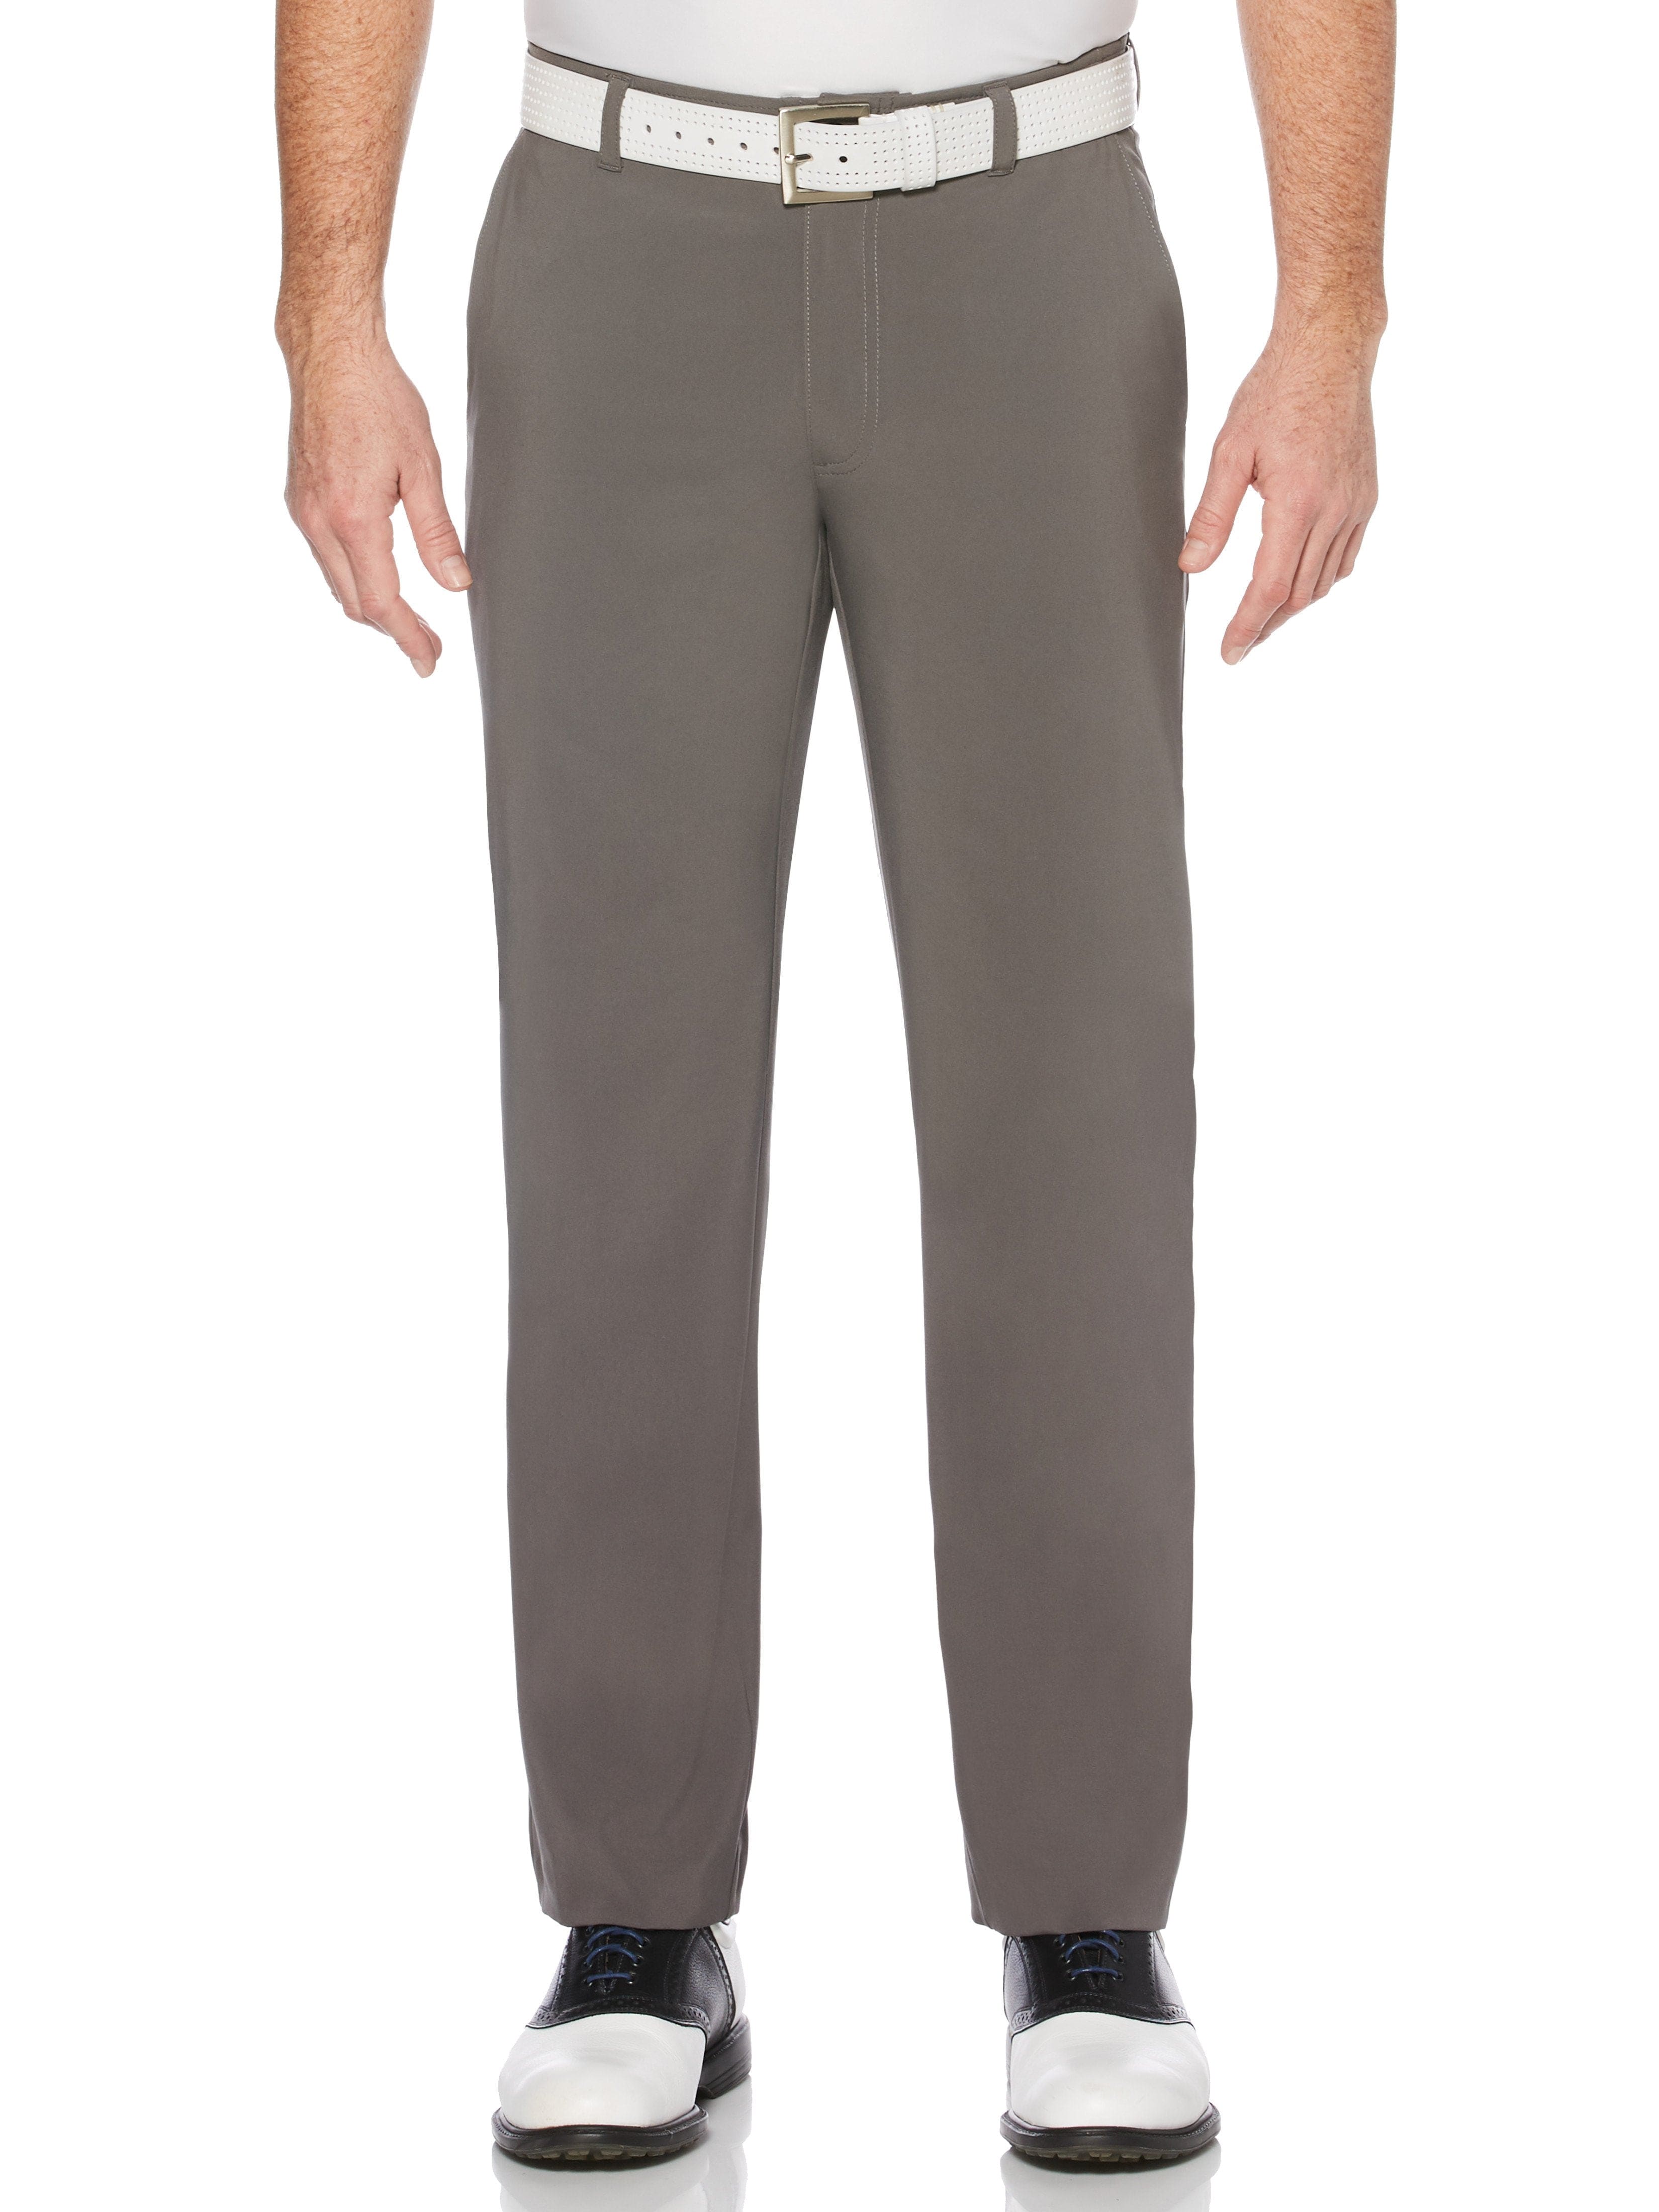 Jack Nicklaus Mens Flat Front Active Flex Pants, Size 42 x 34, Iron Gate Gray, Polyester/Elastane | Golf Apparel Shop